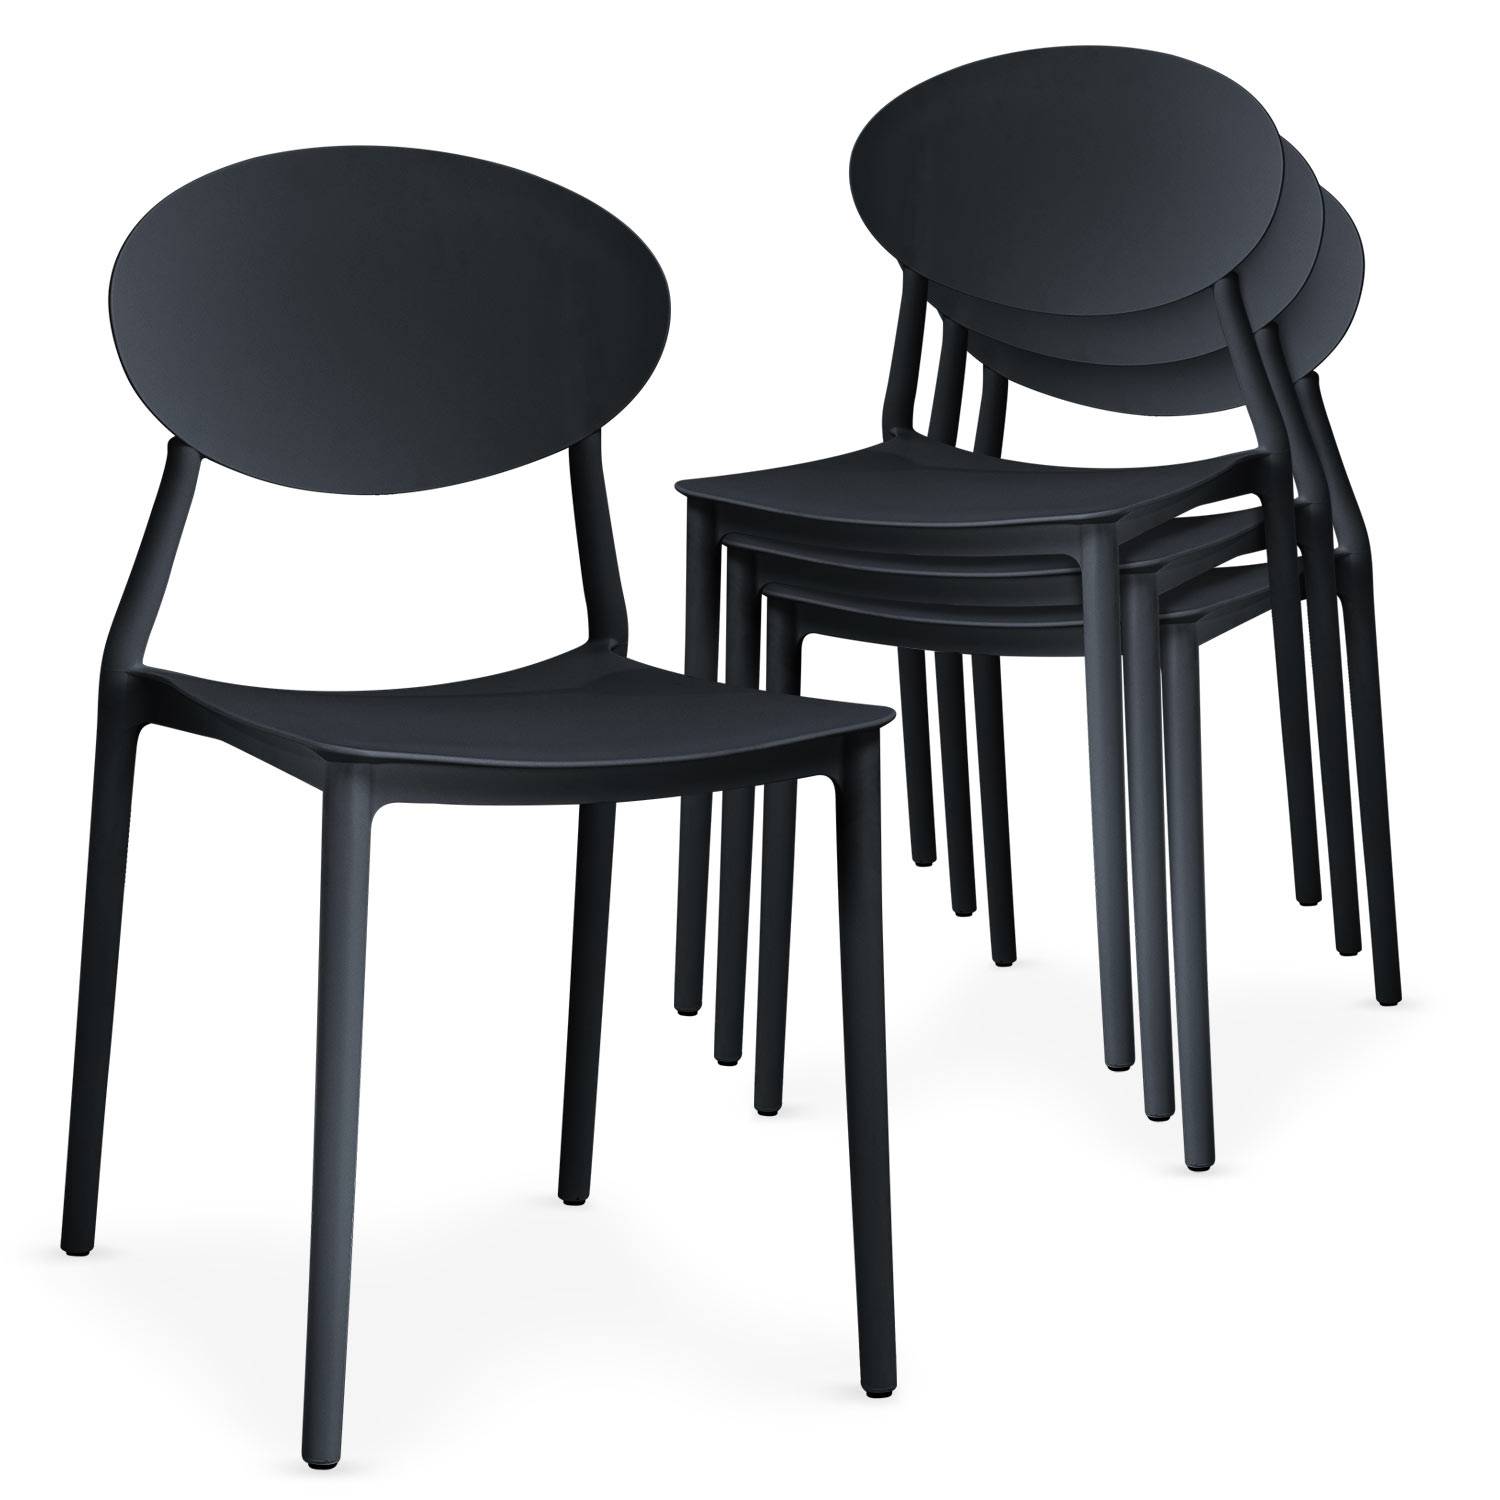 Ensemble de 2 chaises empilables en polypropylène noir nathan - Conforama